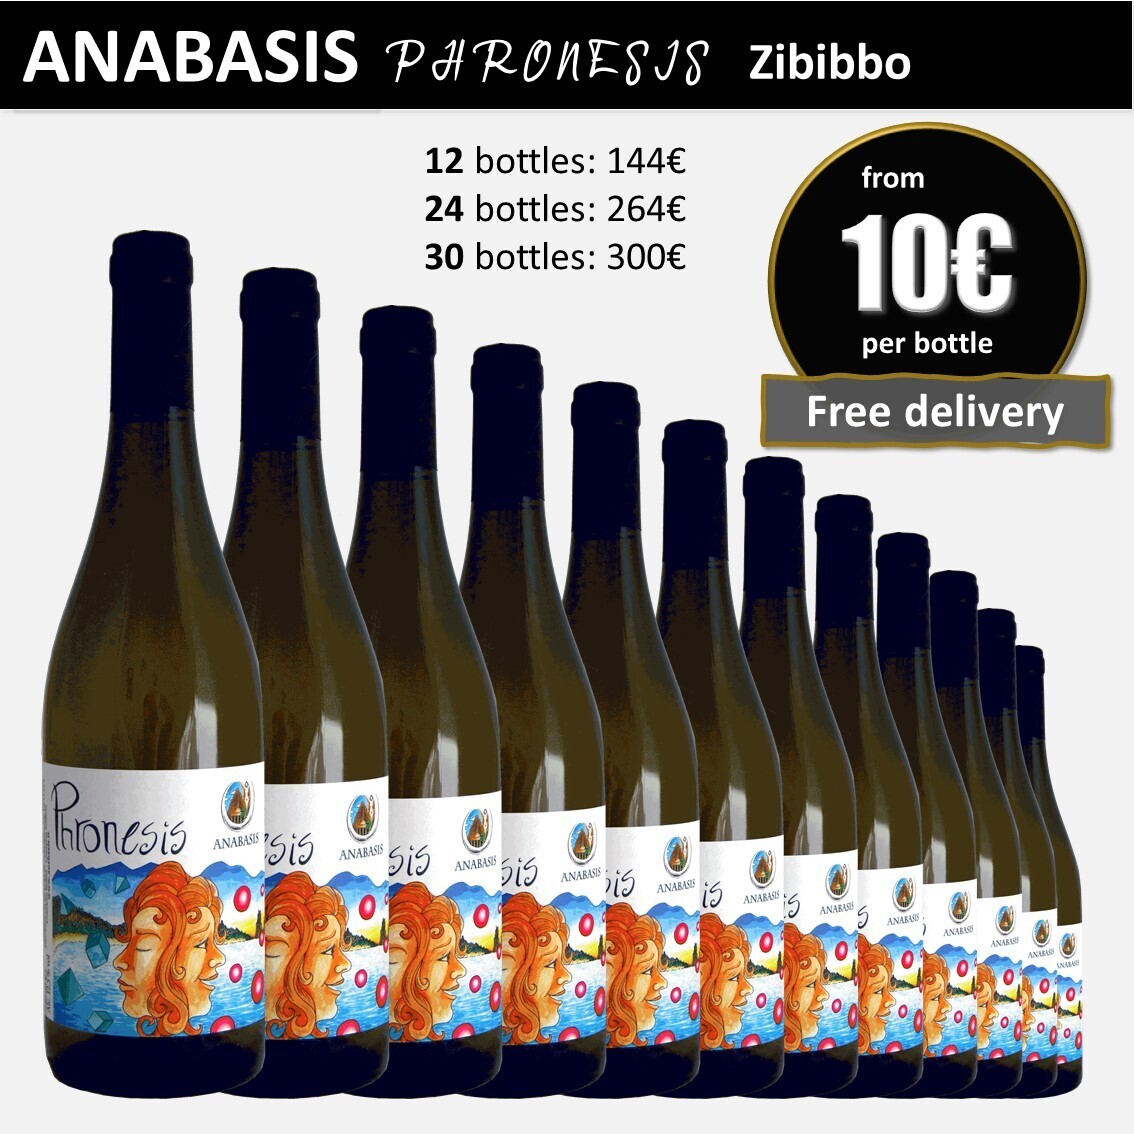 ANABASIS PHRONESIS Zibibbo white 12 bottles